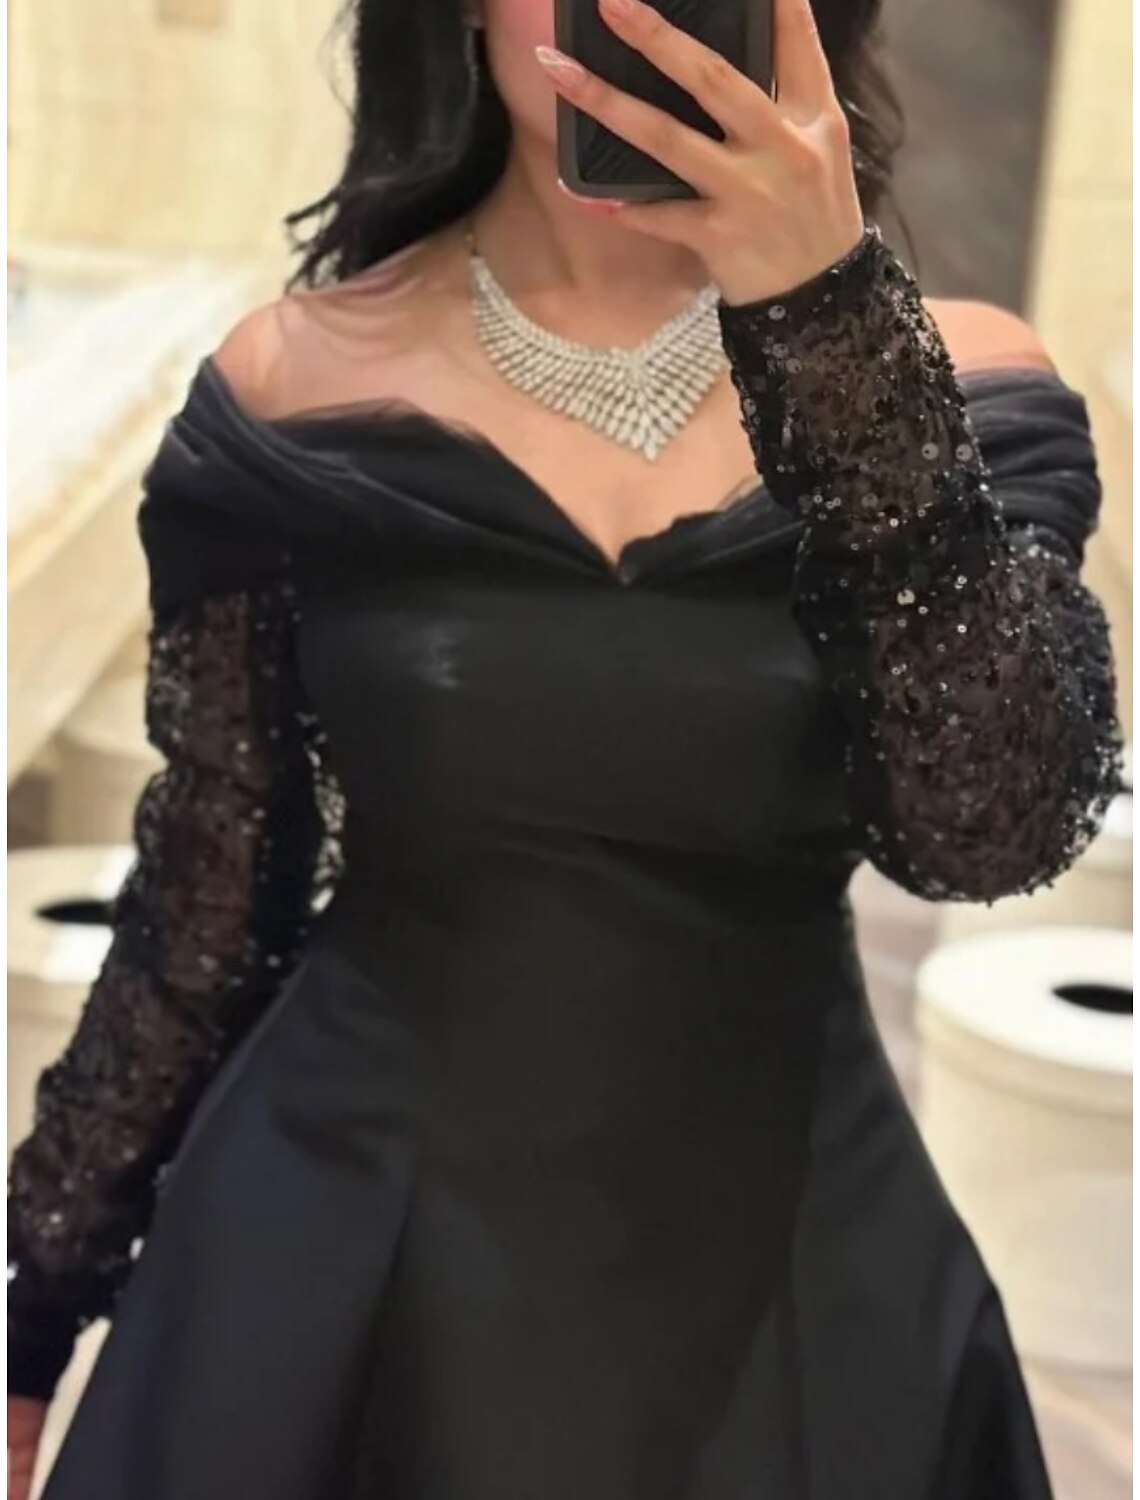 A-Line Evening Gown Elegant Black Dress Plus Size Dress Formal Floor Length Long Sleeve Off Shoulder Satin with Pleats Sequin